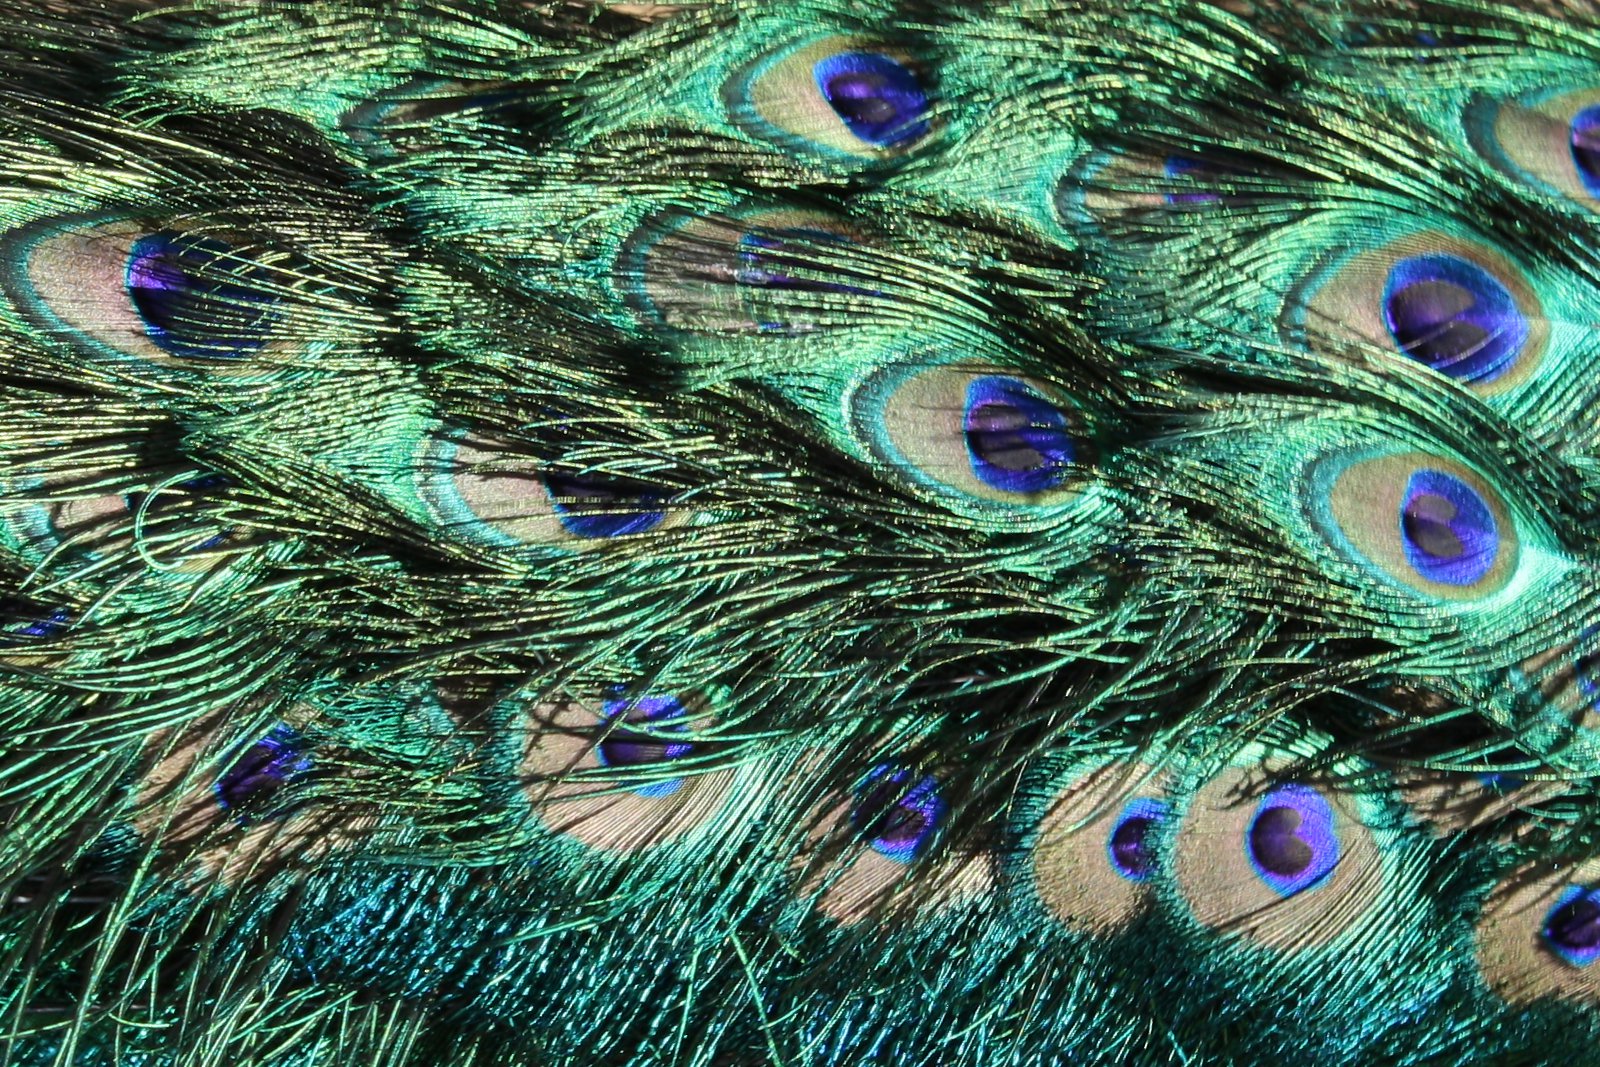 Peacock Feathers Texture Picture Photograph Photos Public